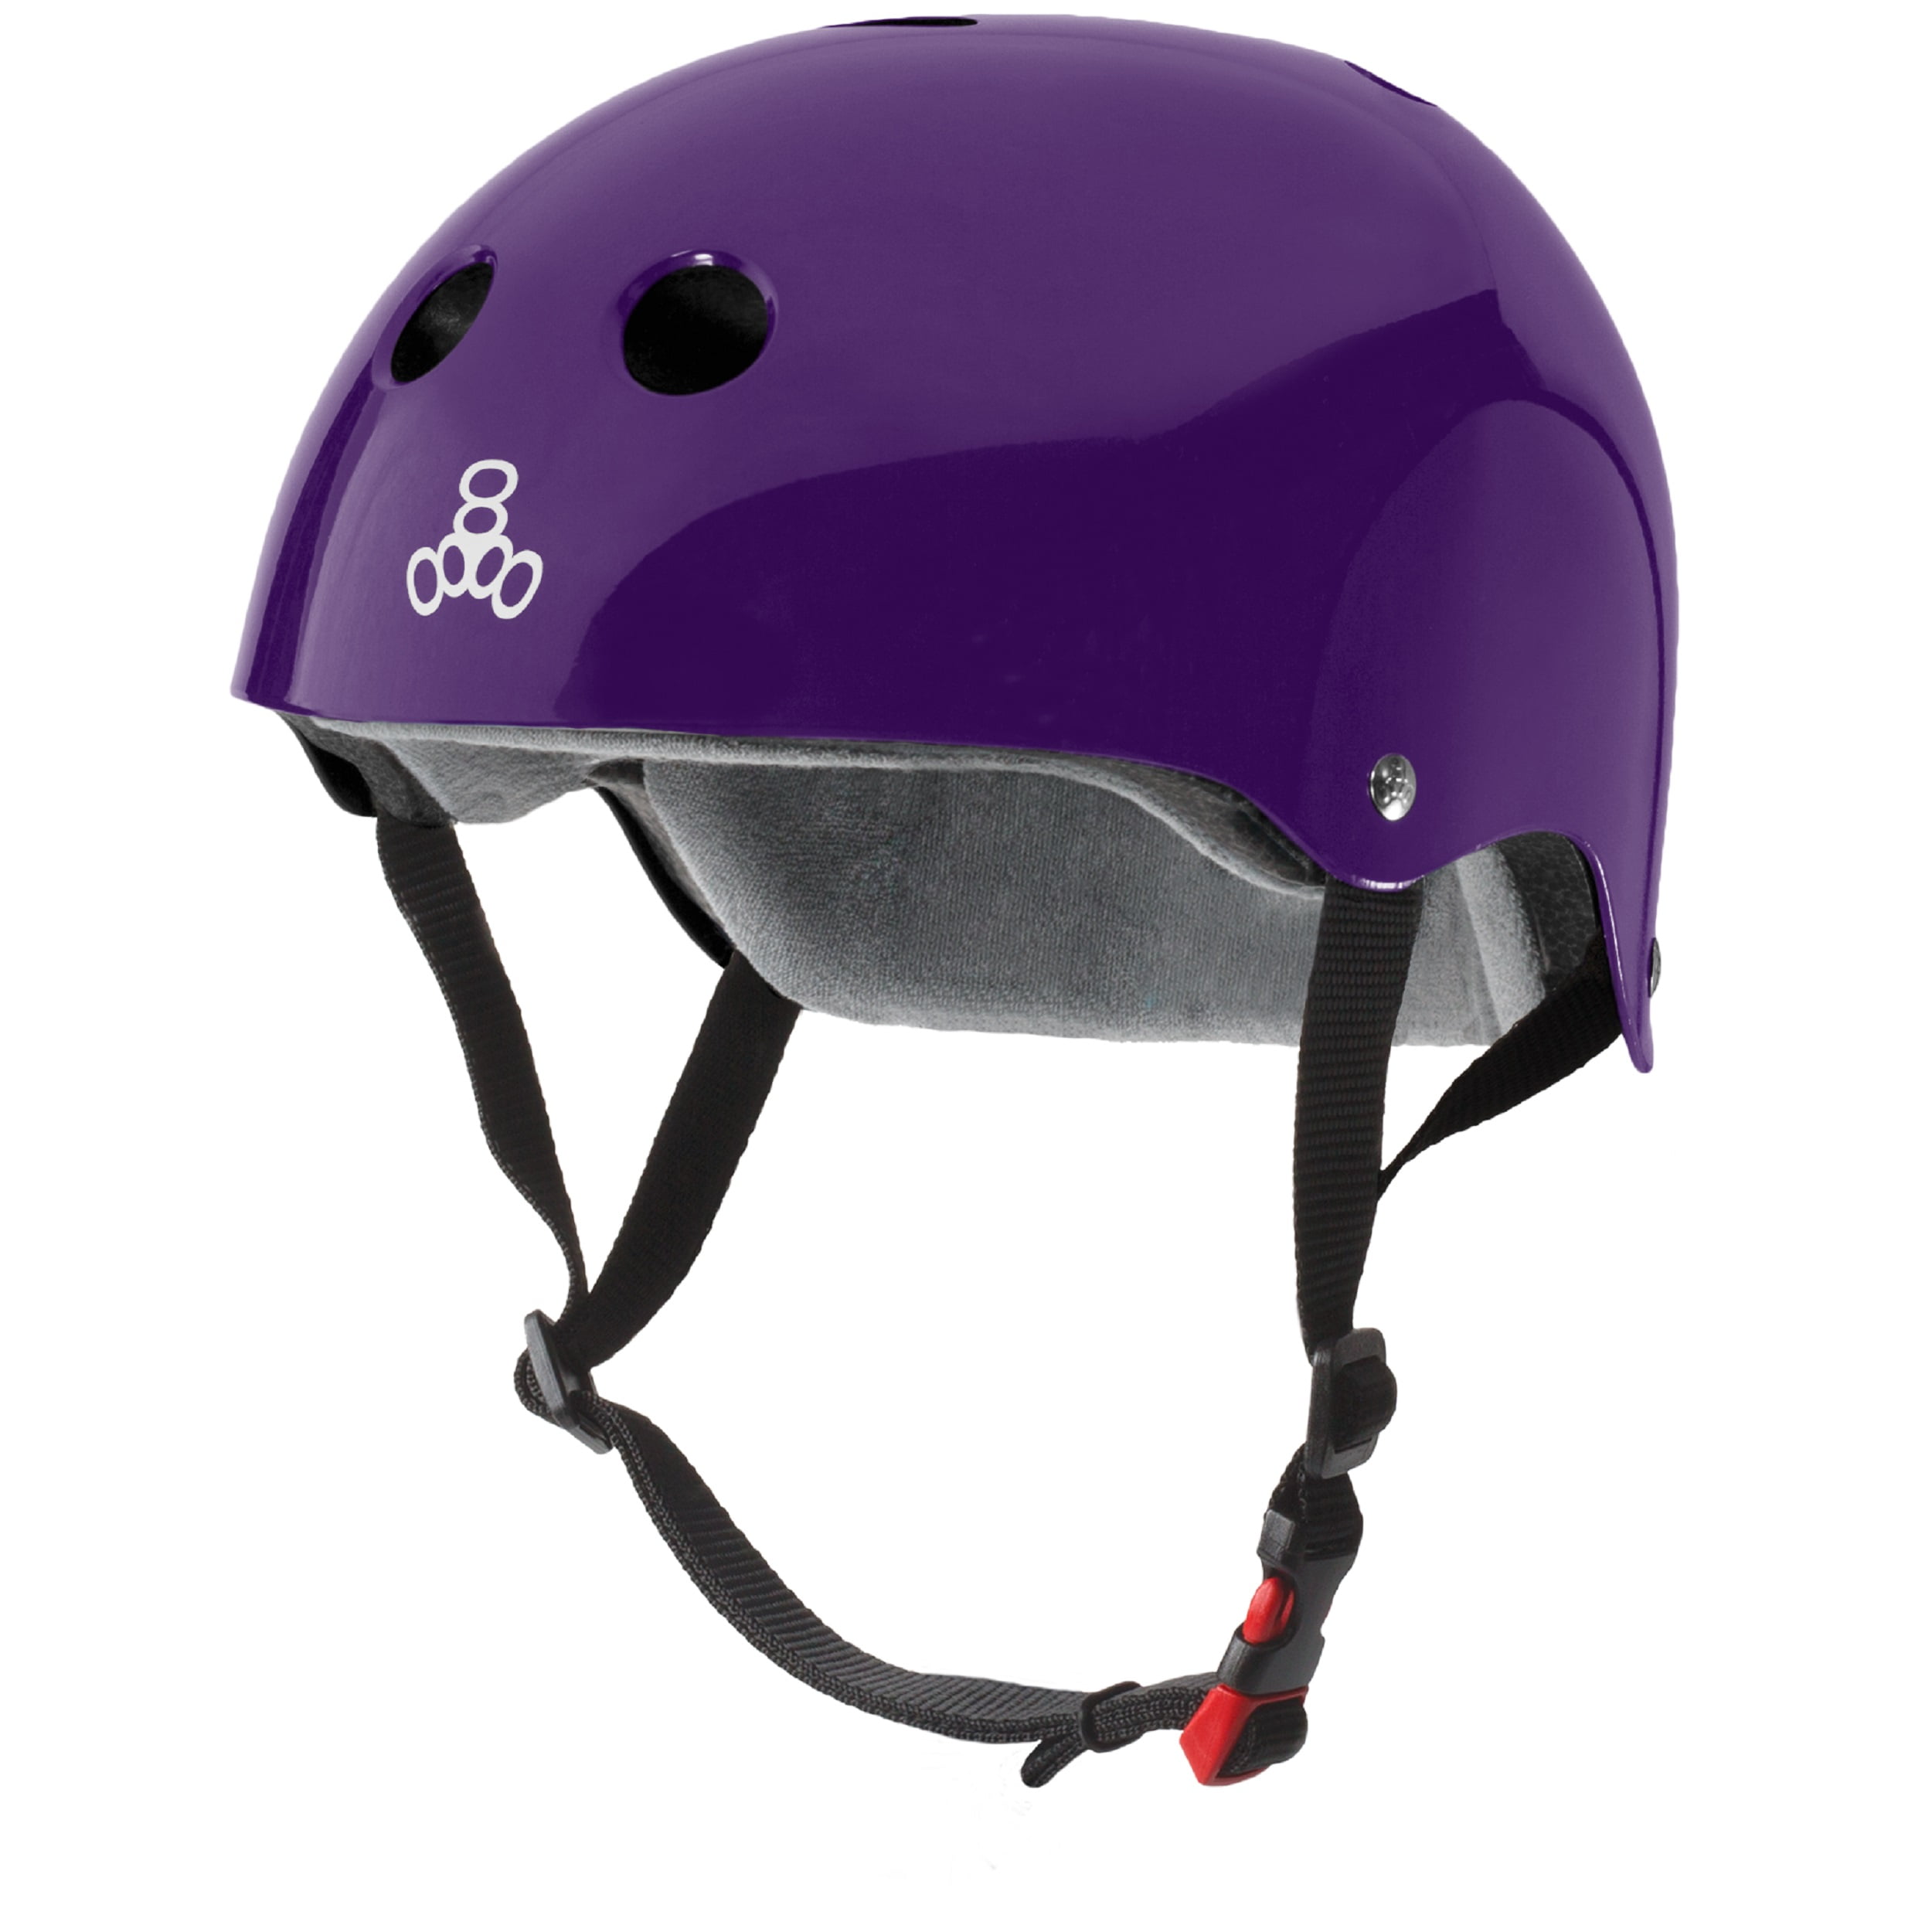 L BMX Bicycle Cycling Scooter Ski Skate Skateboard Protective Helmet Black XS 